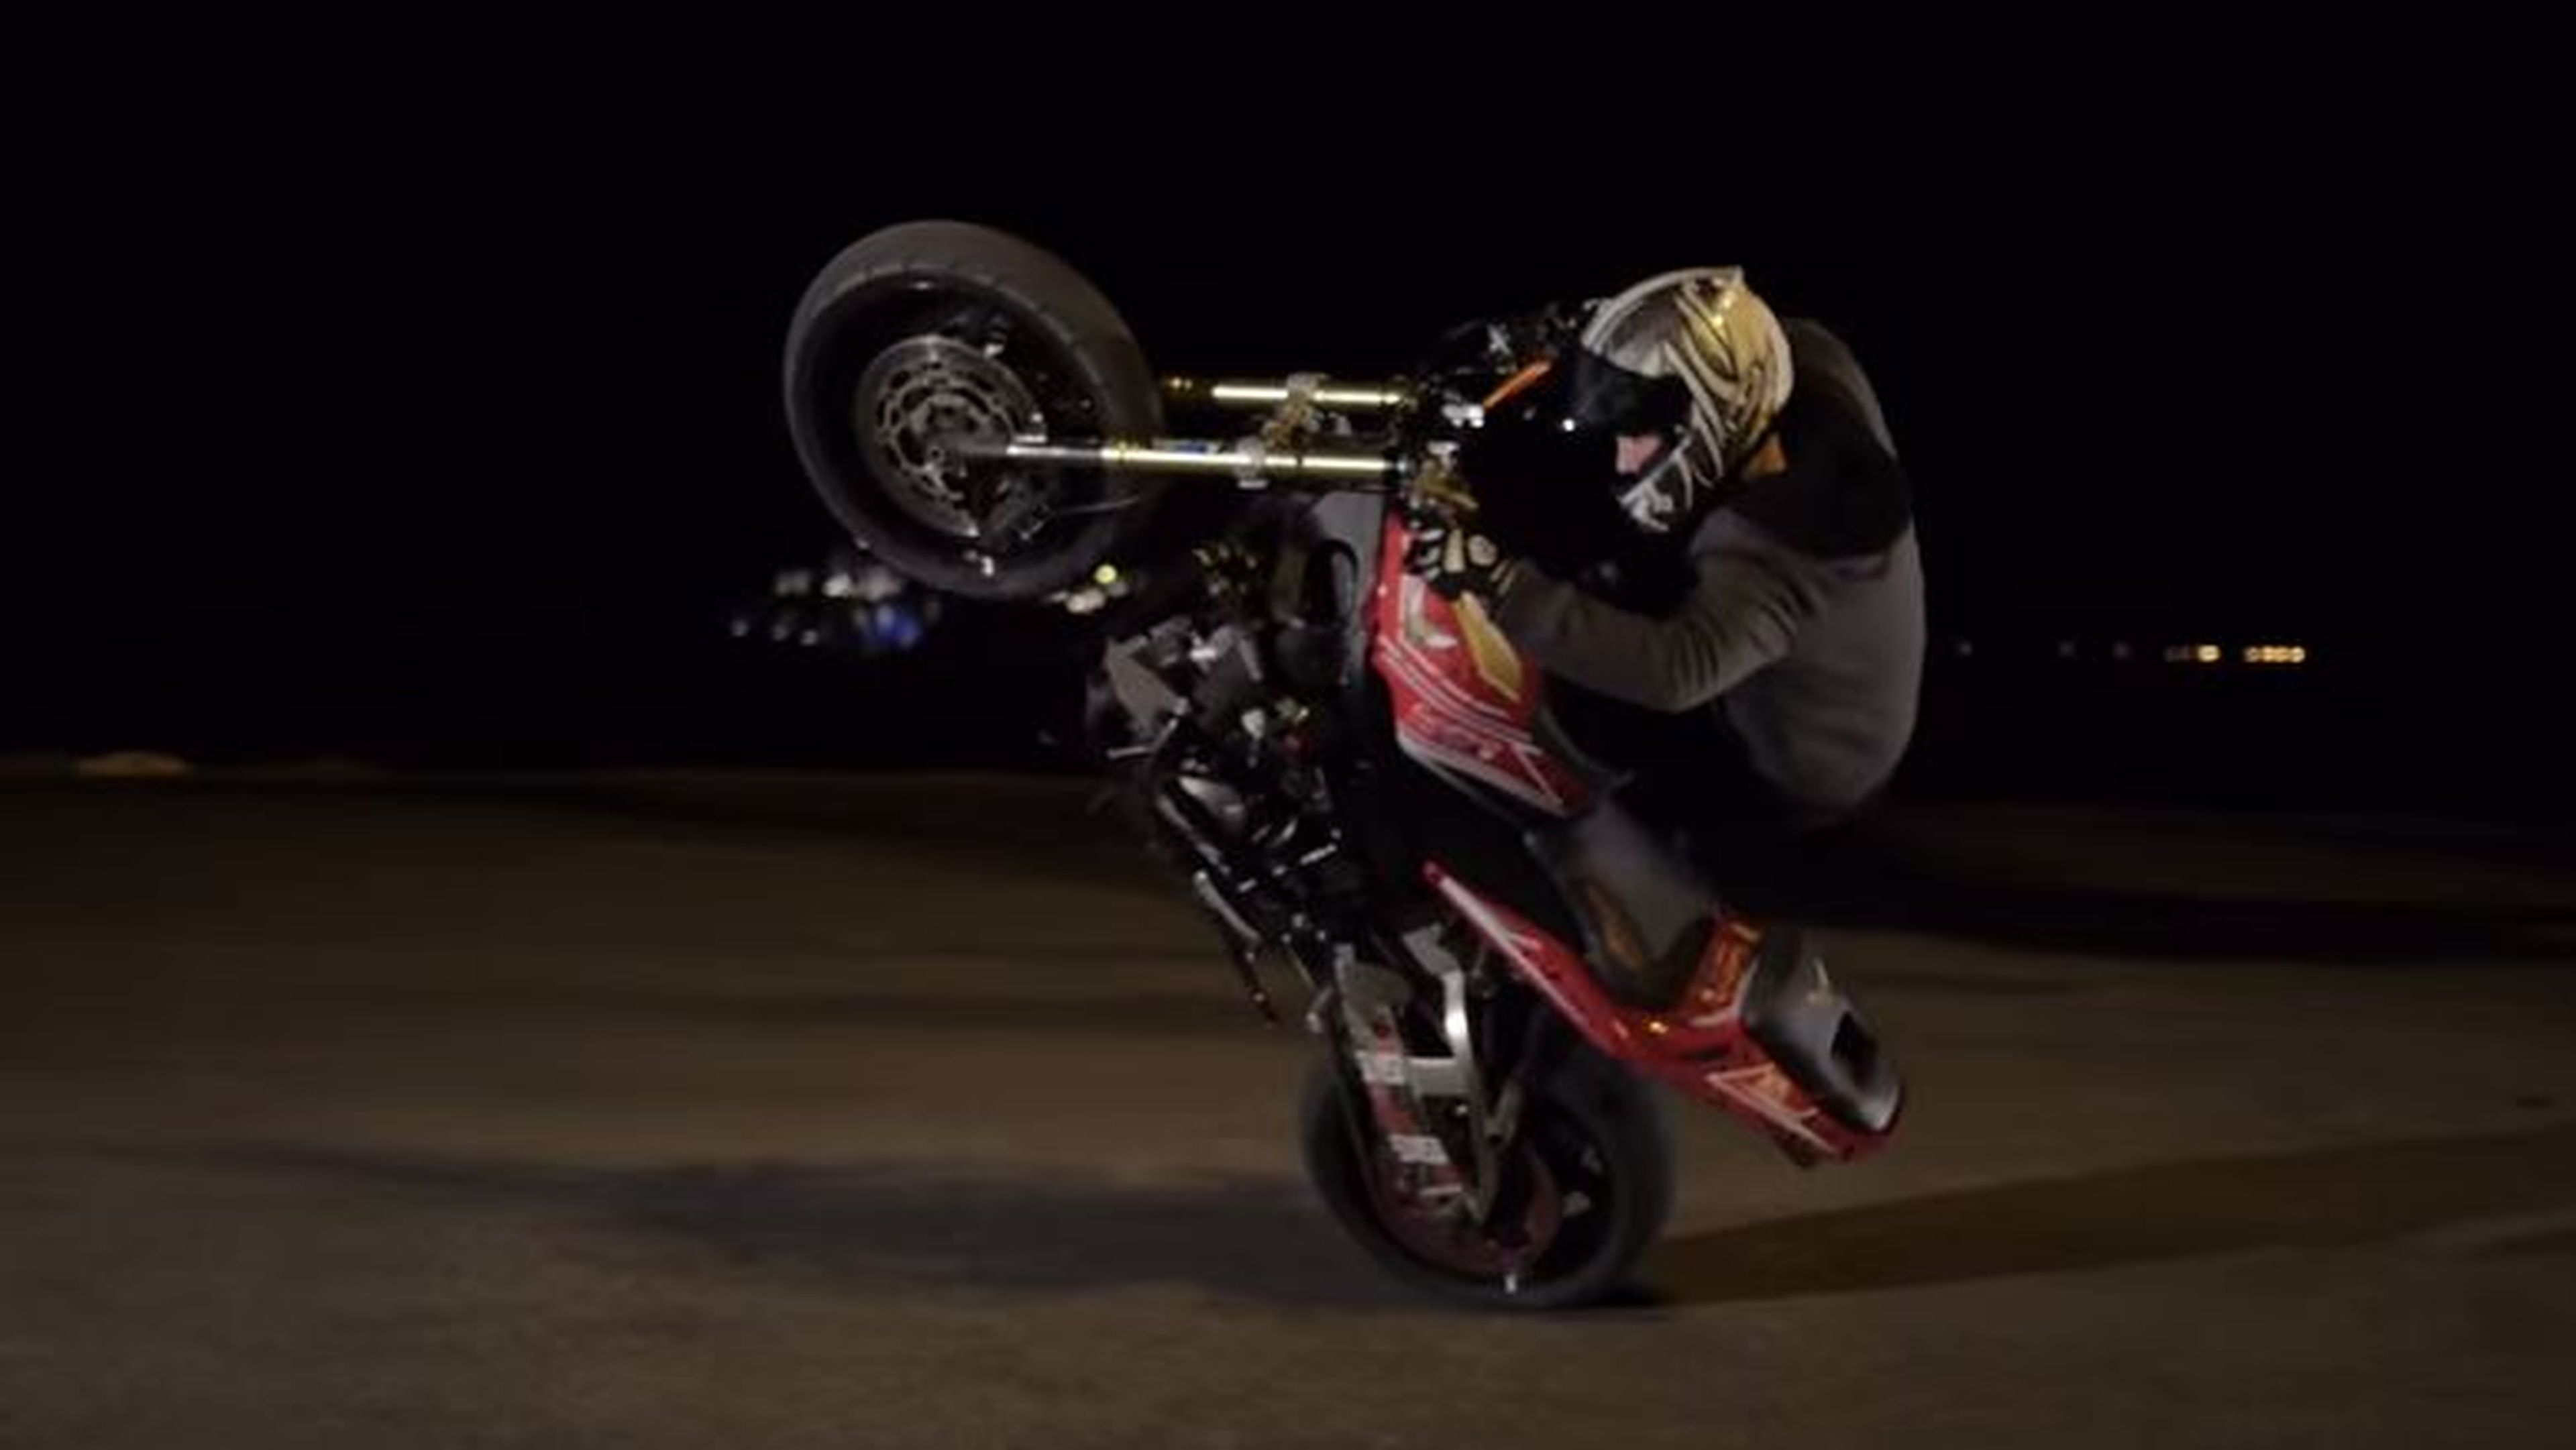 Vídeo: Stunt moto versus BMX freestyle ¿moto o bici?